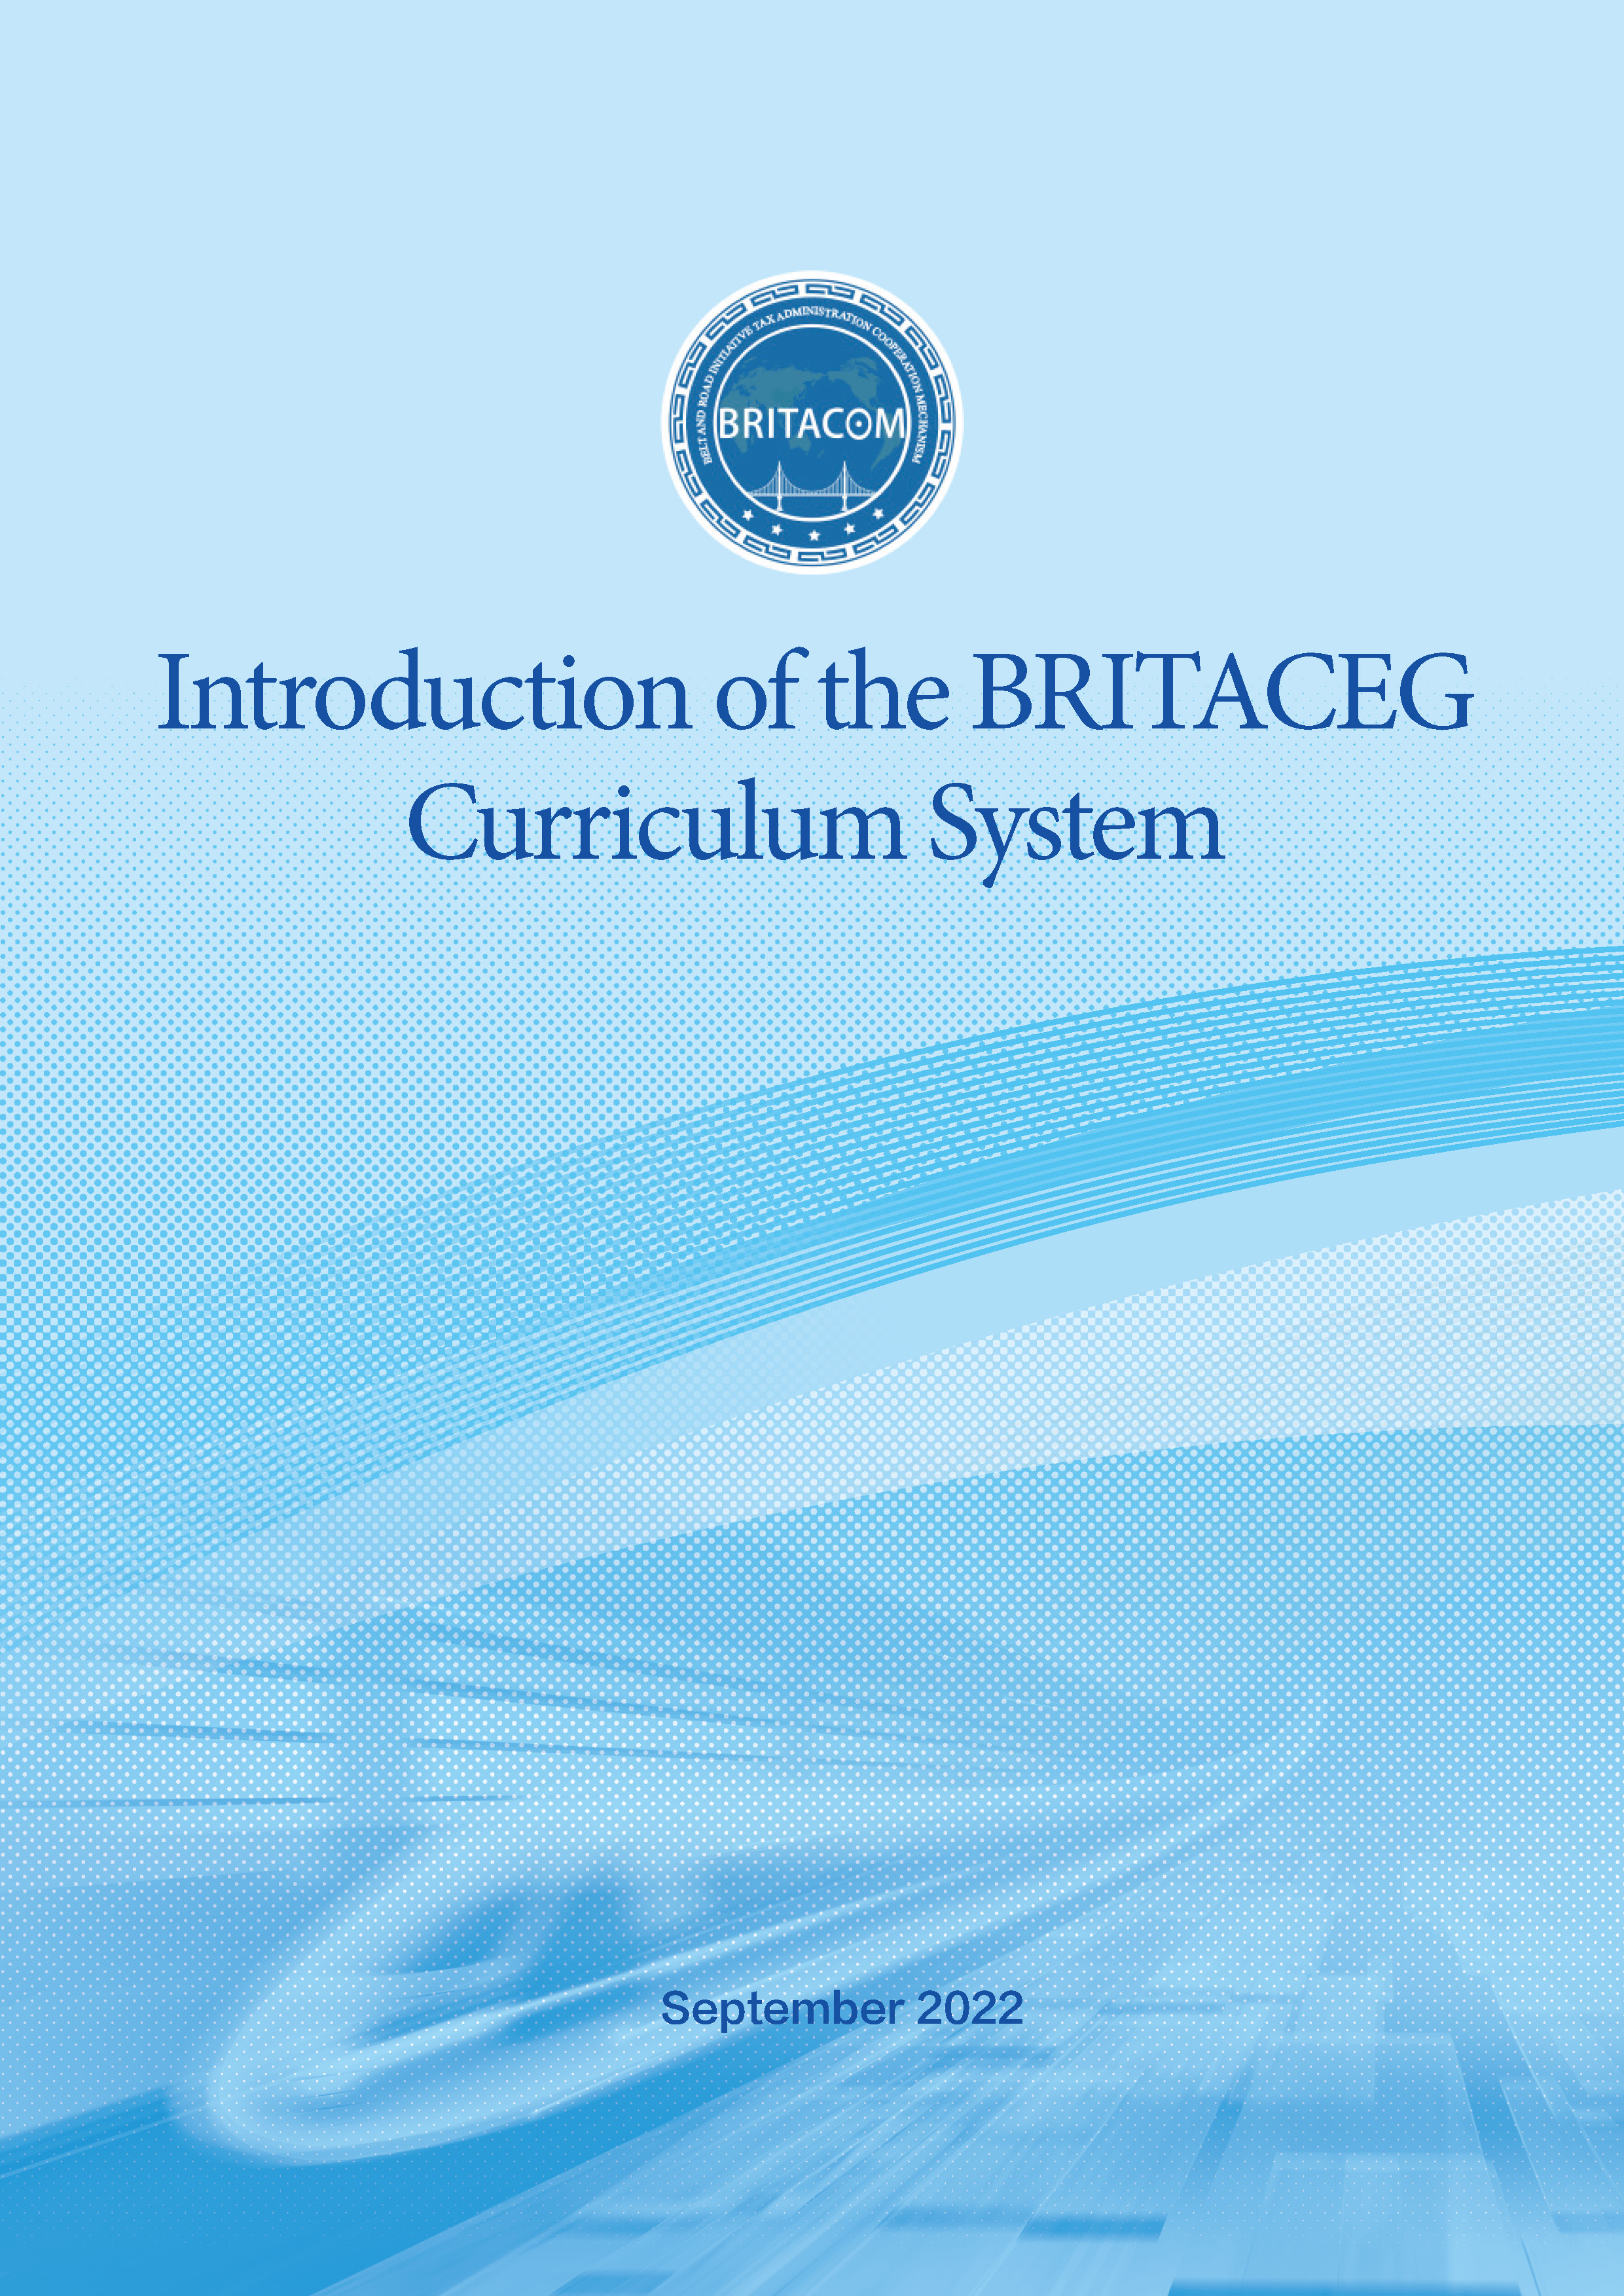 页面提取自－Introduction of the BRITACEG Curriculum System.jpg